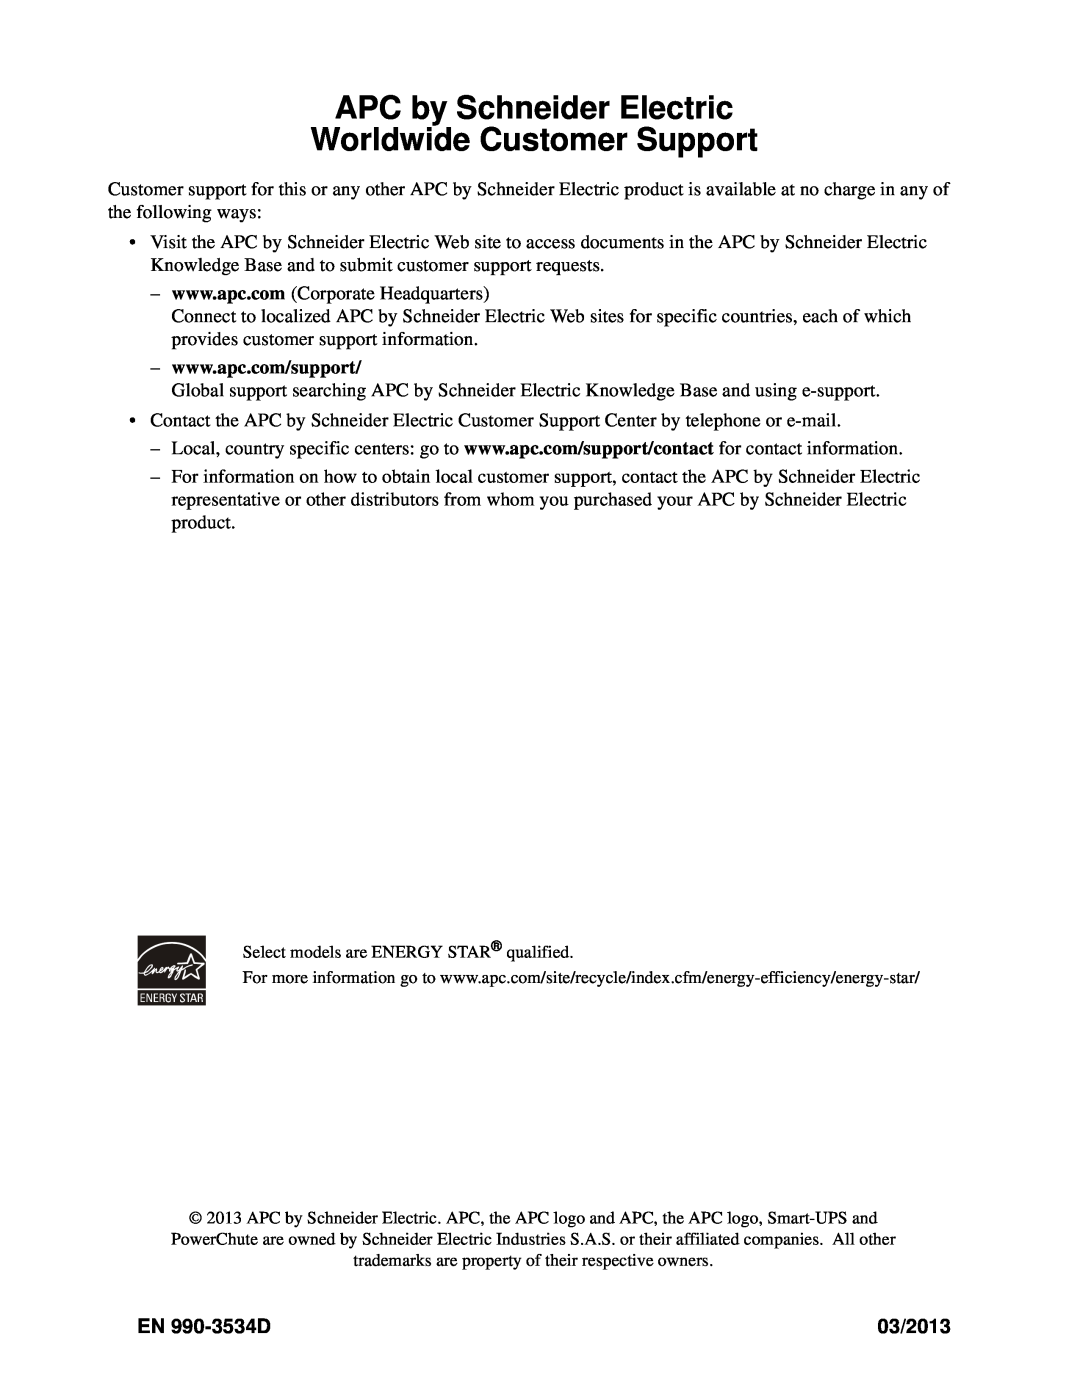 TRENDnet SMT1000 operation manual APC by Schneider Electric Worldwide Customer Support, EN 990-3534D, 03/2013 